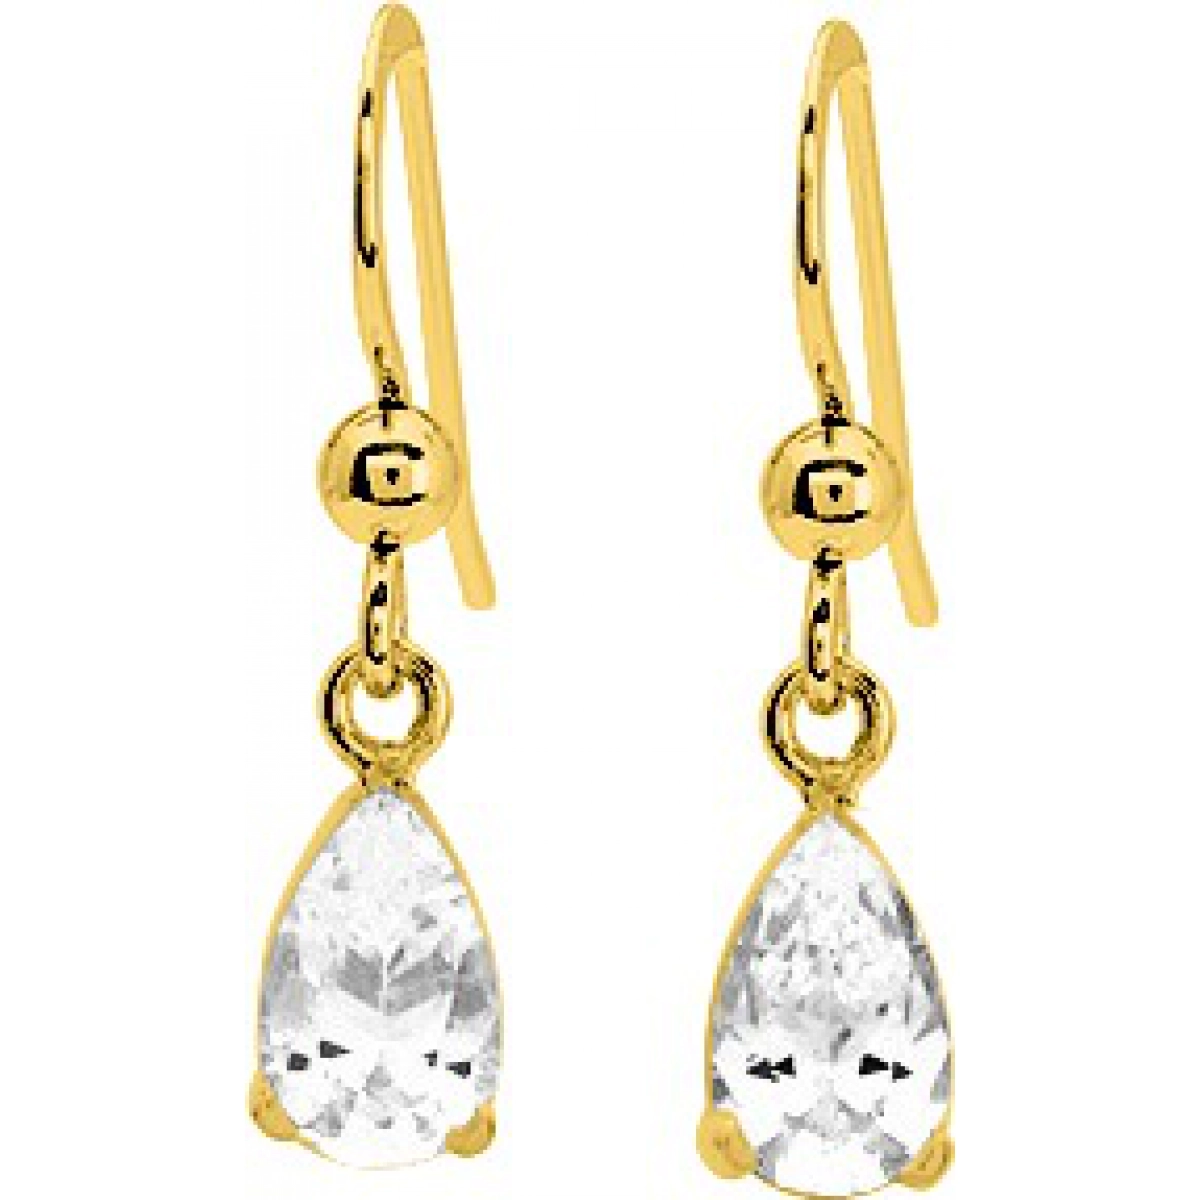 Earrings pair w. cz gold plated Brass  Lua Blanca  105540.1.0